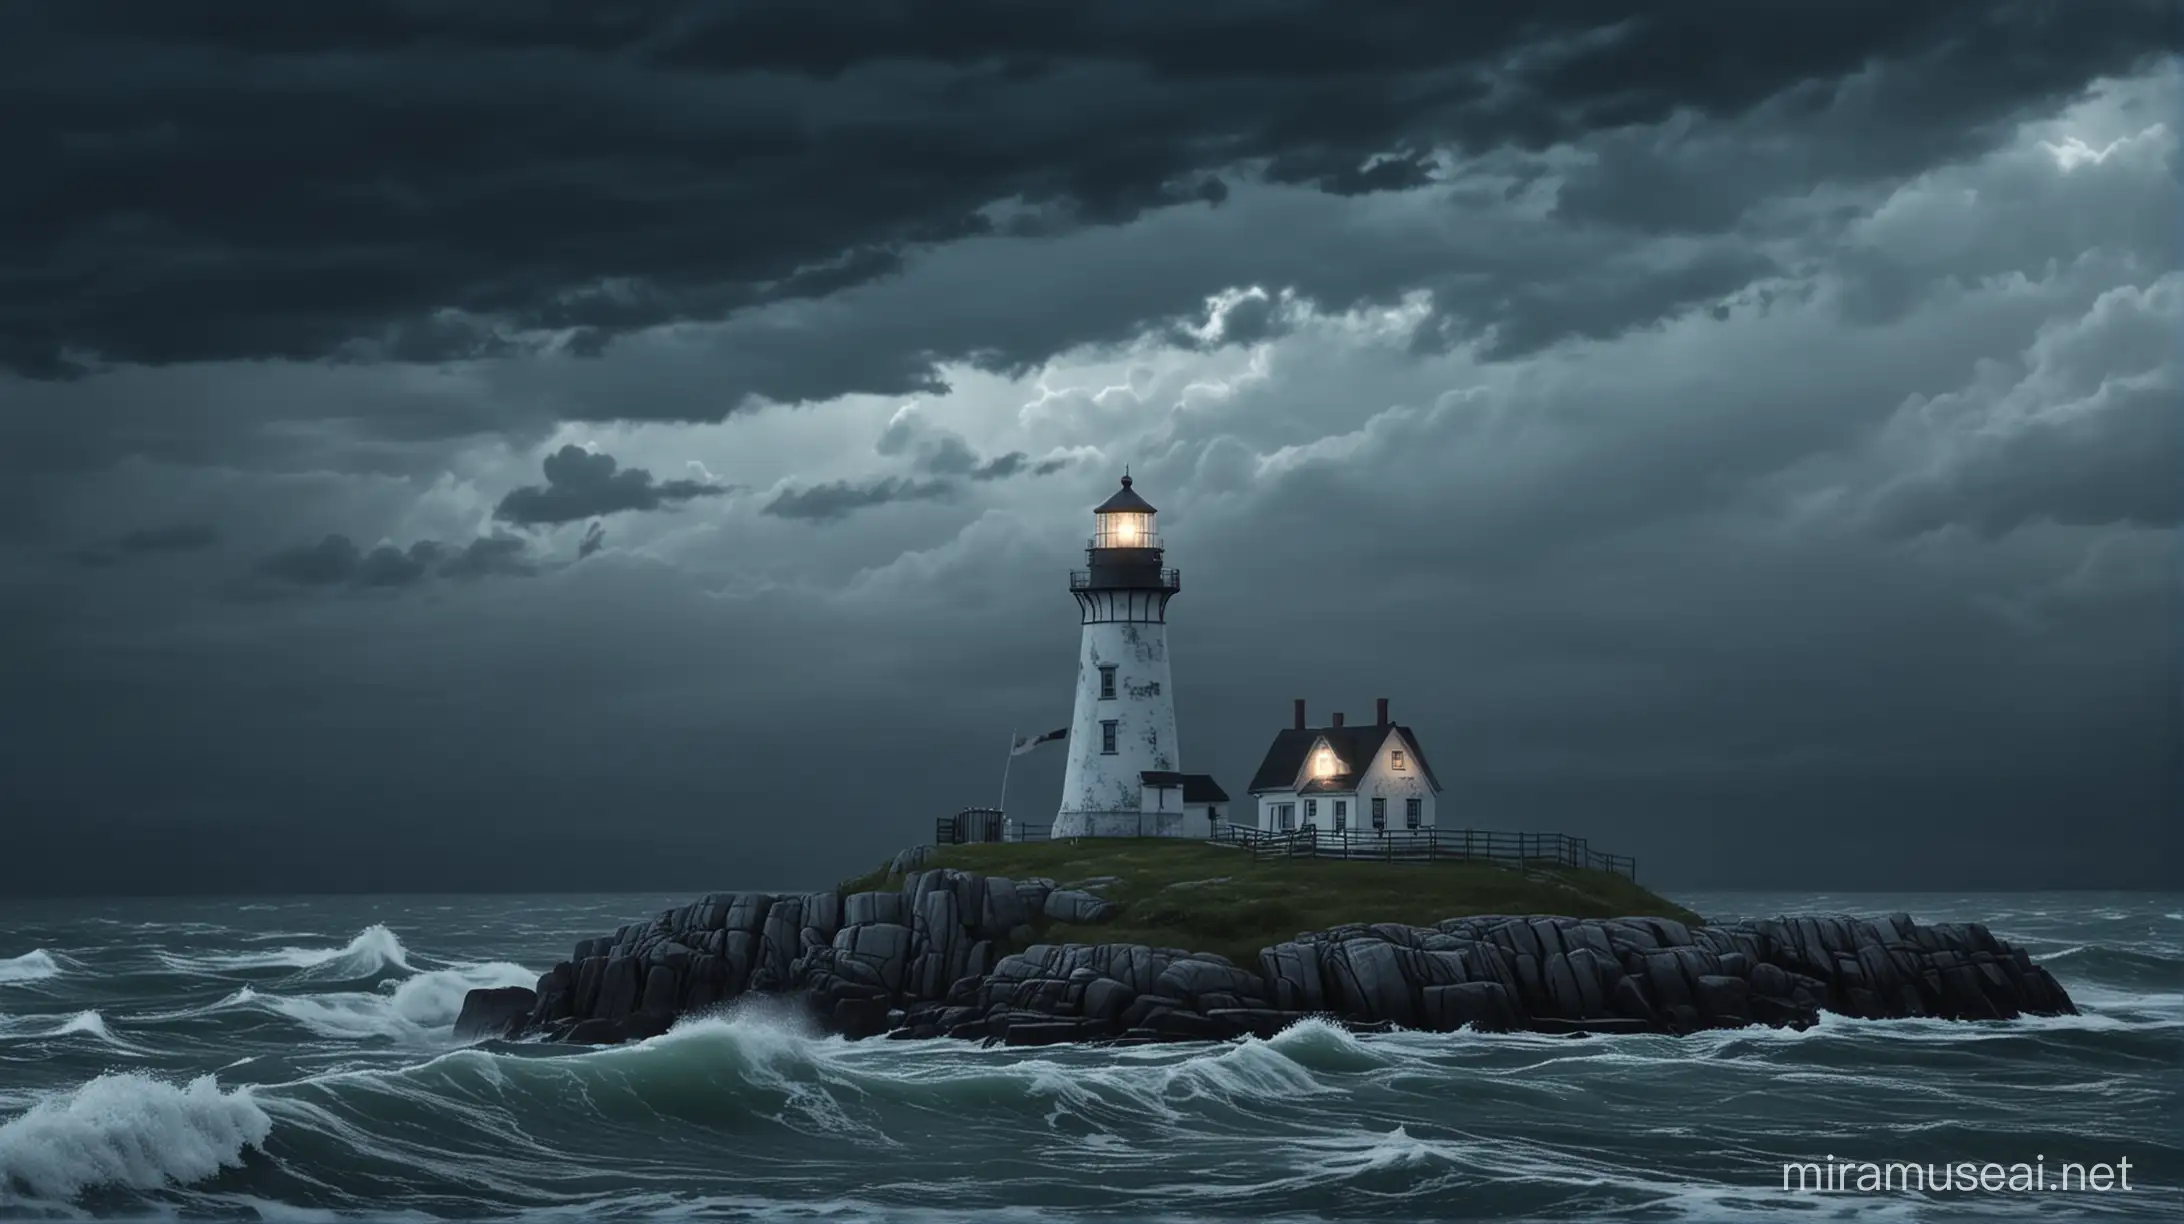 Cinematic Night Scene Nova Scotia Shabby Lighthouse Amid Storm Clouds